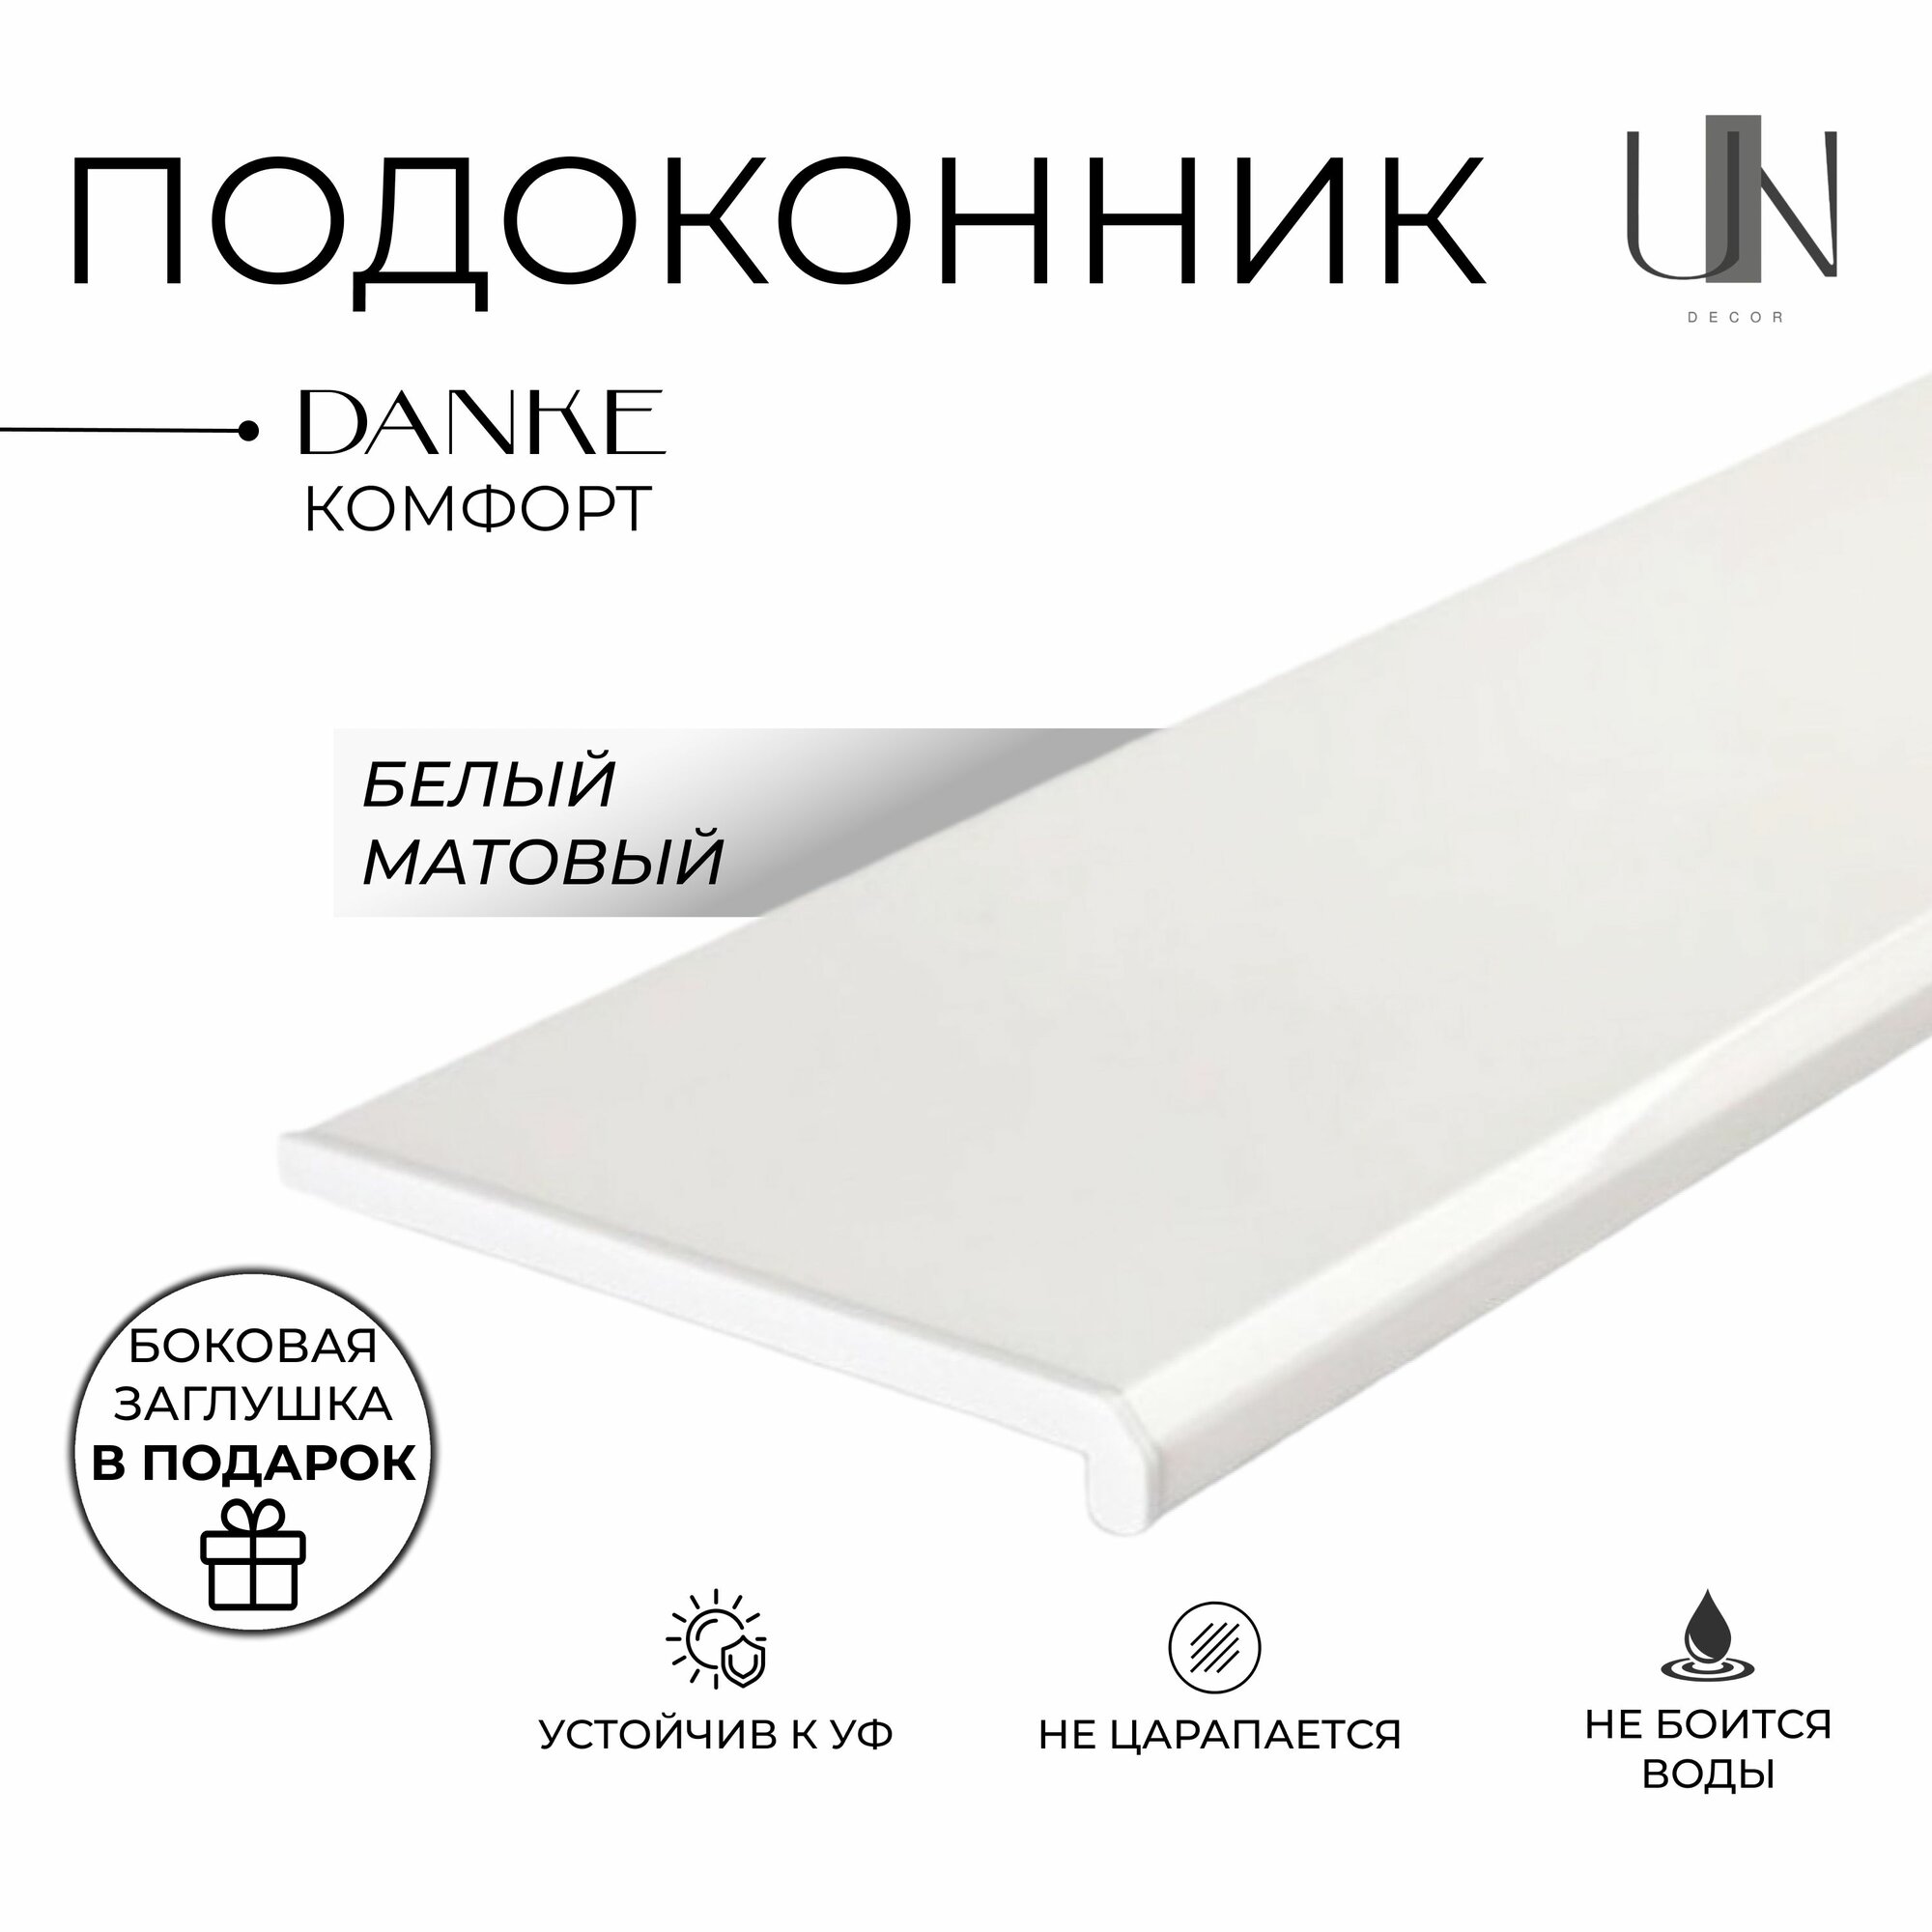 Подоконник Данке Белый матовый коллекция DANKE KOMFORT 60 см х 11 м. пог.(600мм*1100мм)